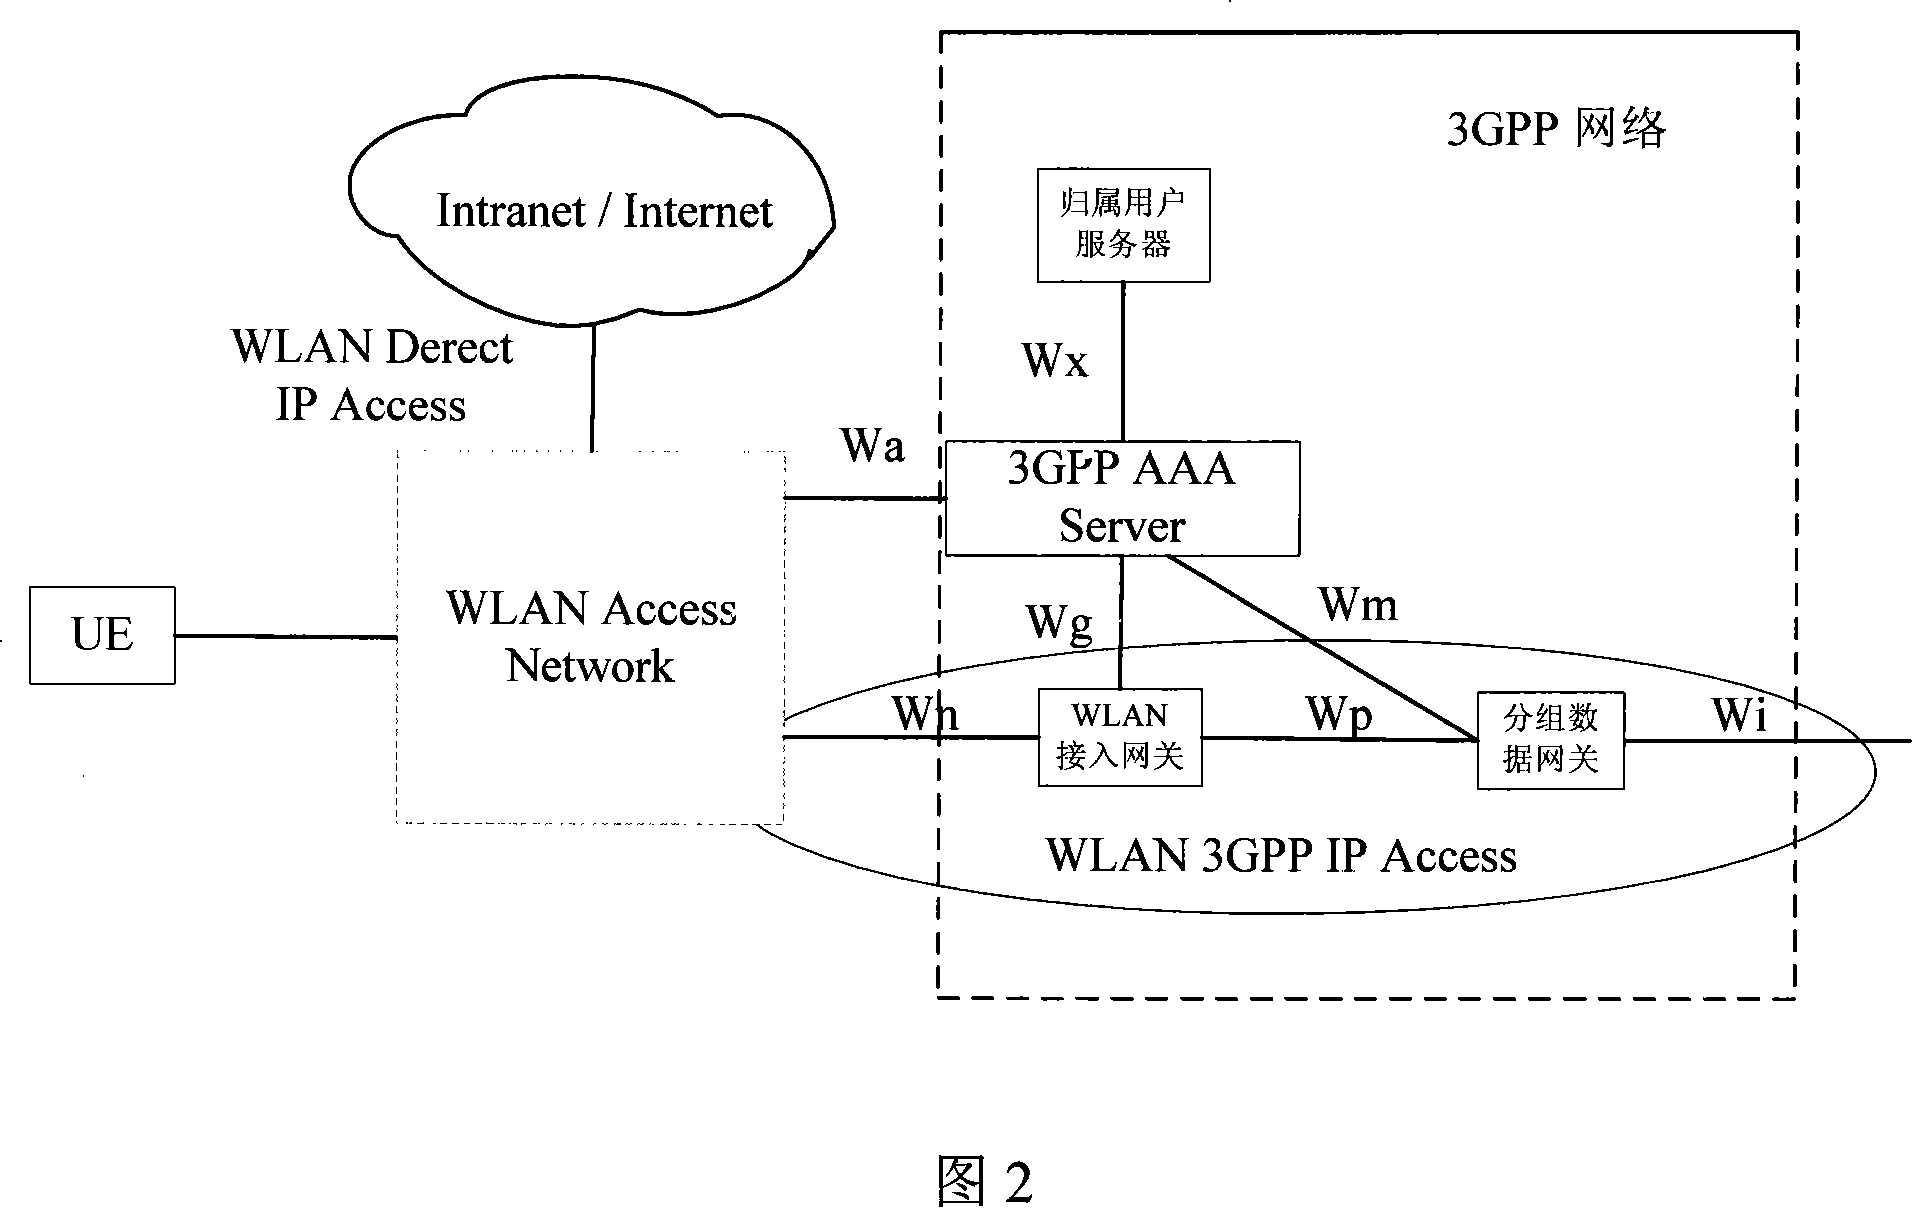 Gateway selecting method of wireless network